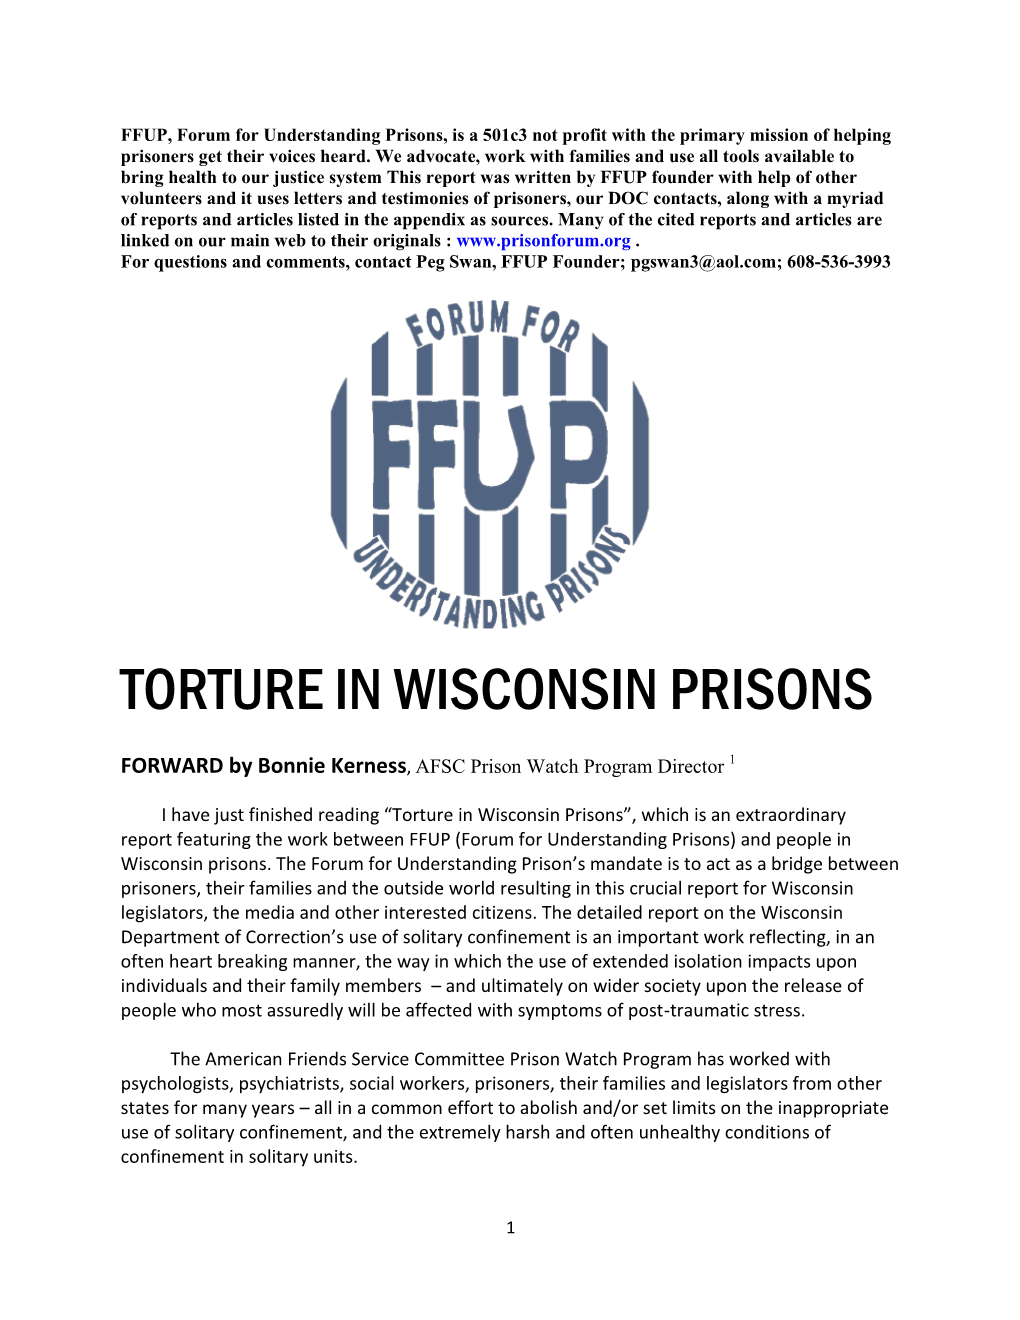 Torture in Wisconsin Prisons